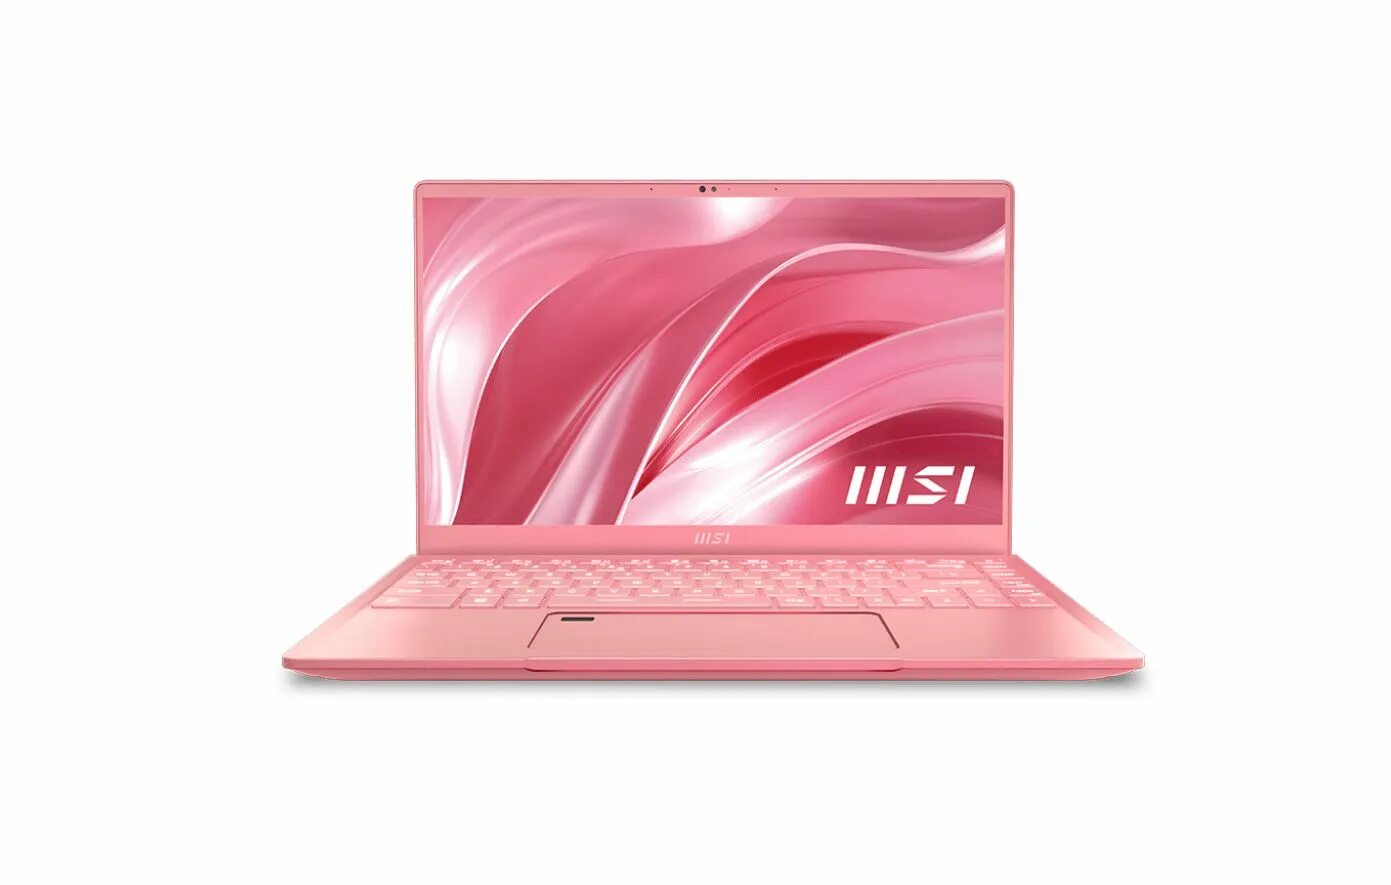 Ноутбук MSI Prestige 14. MSI Prestige 14 Pink. 14" Ультрабук MSI Prestige 14 a11sb-639ru розовый. MSI Prestige 14 a10sc. Ноутбук купить в кургане